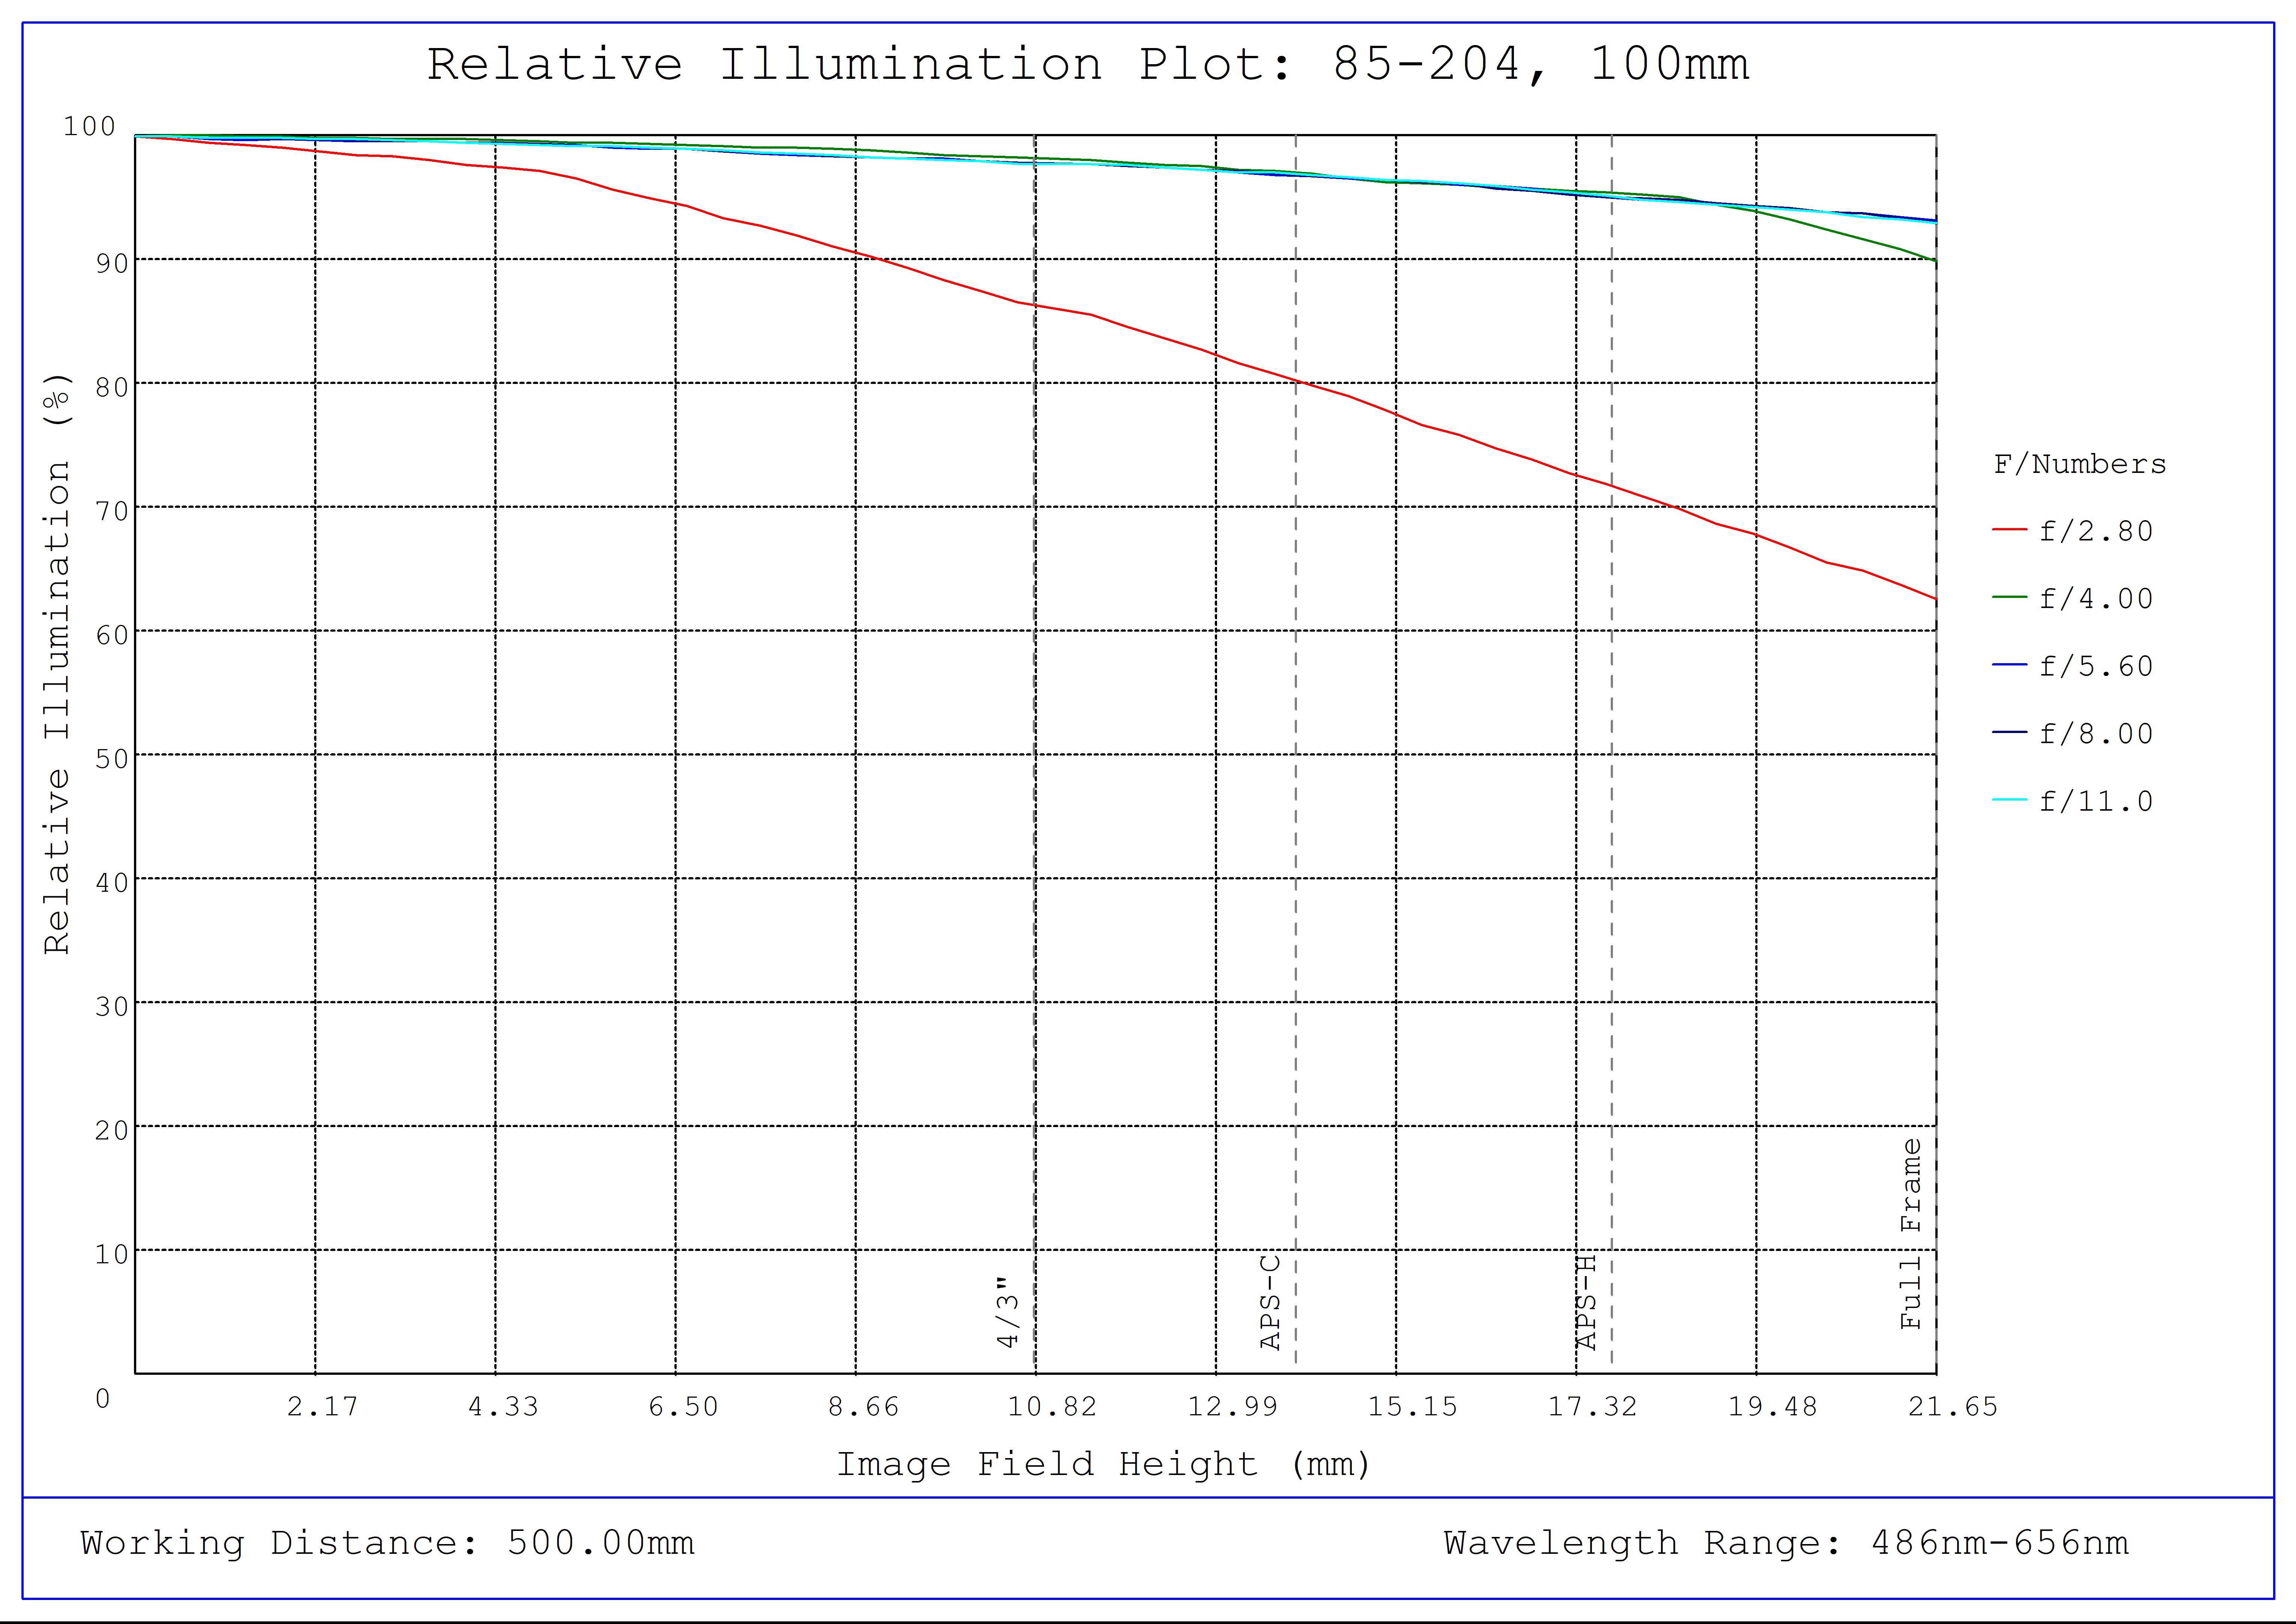 #85-204, 100mm Focal Length, LF Series Fixed Focal Length Lens, Relative Illumination Plot